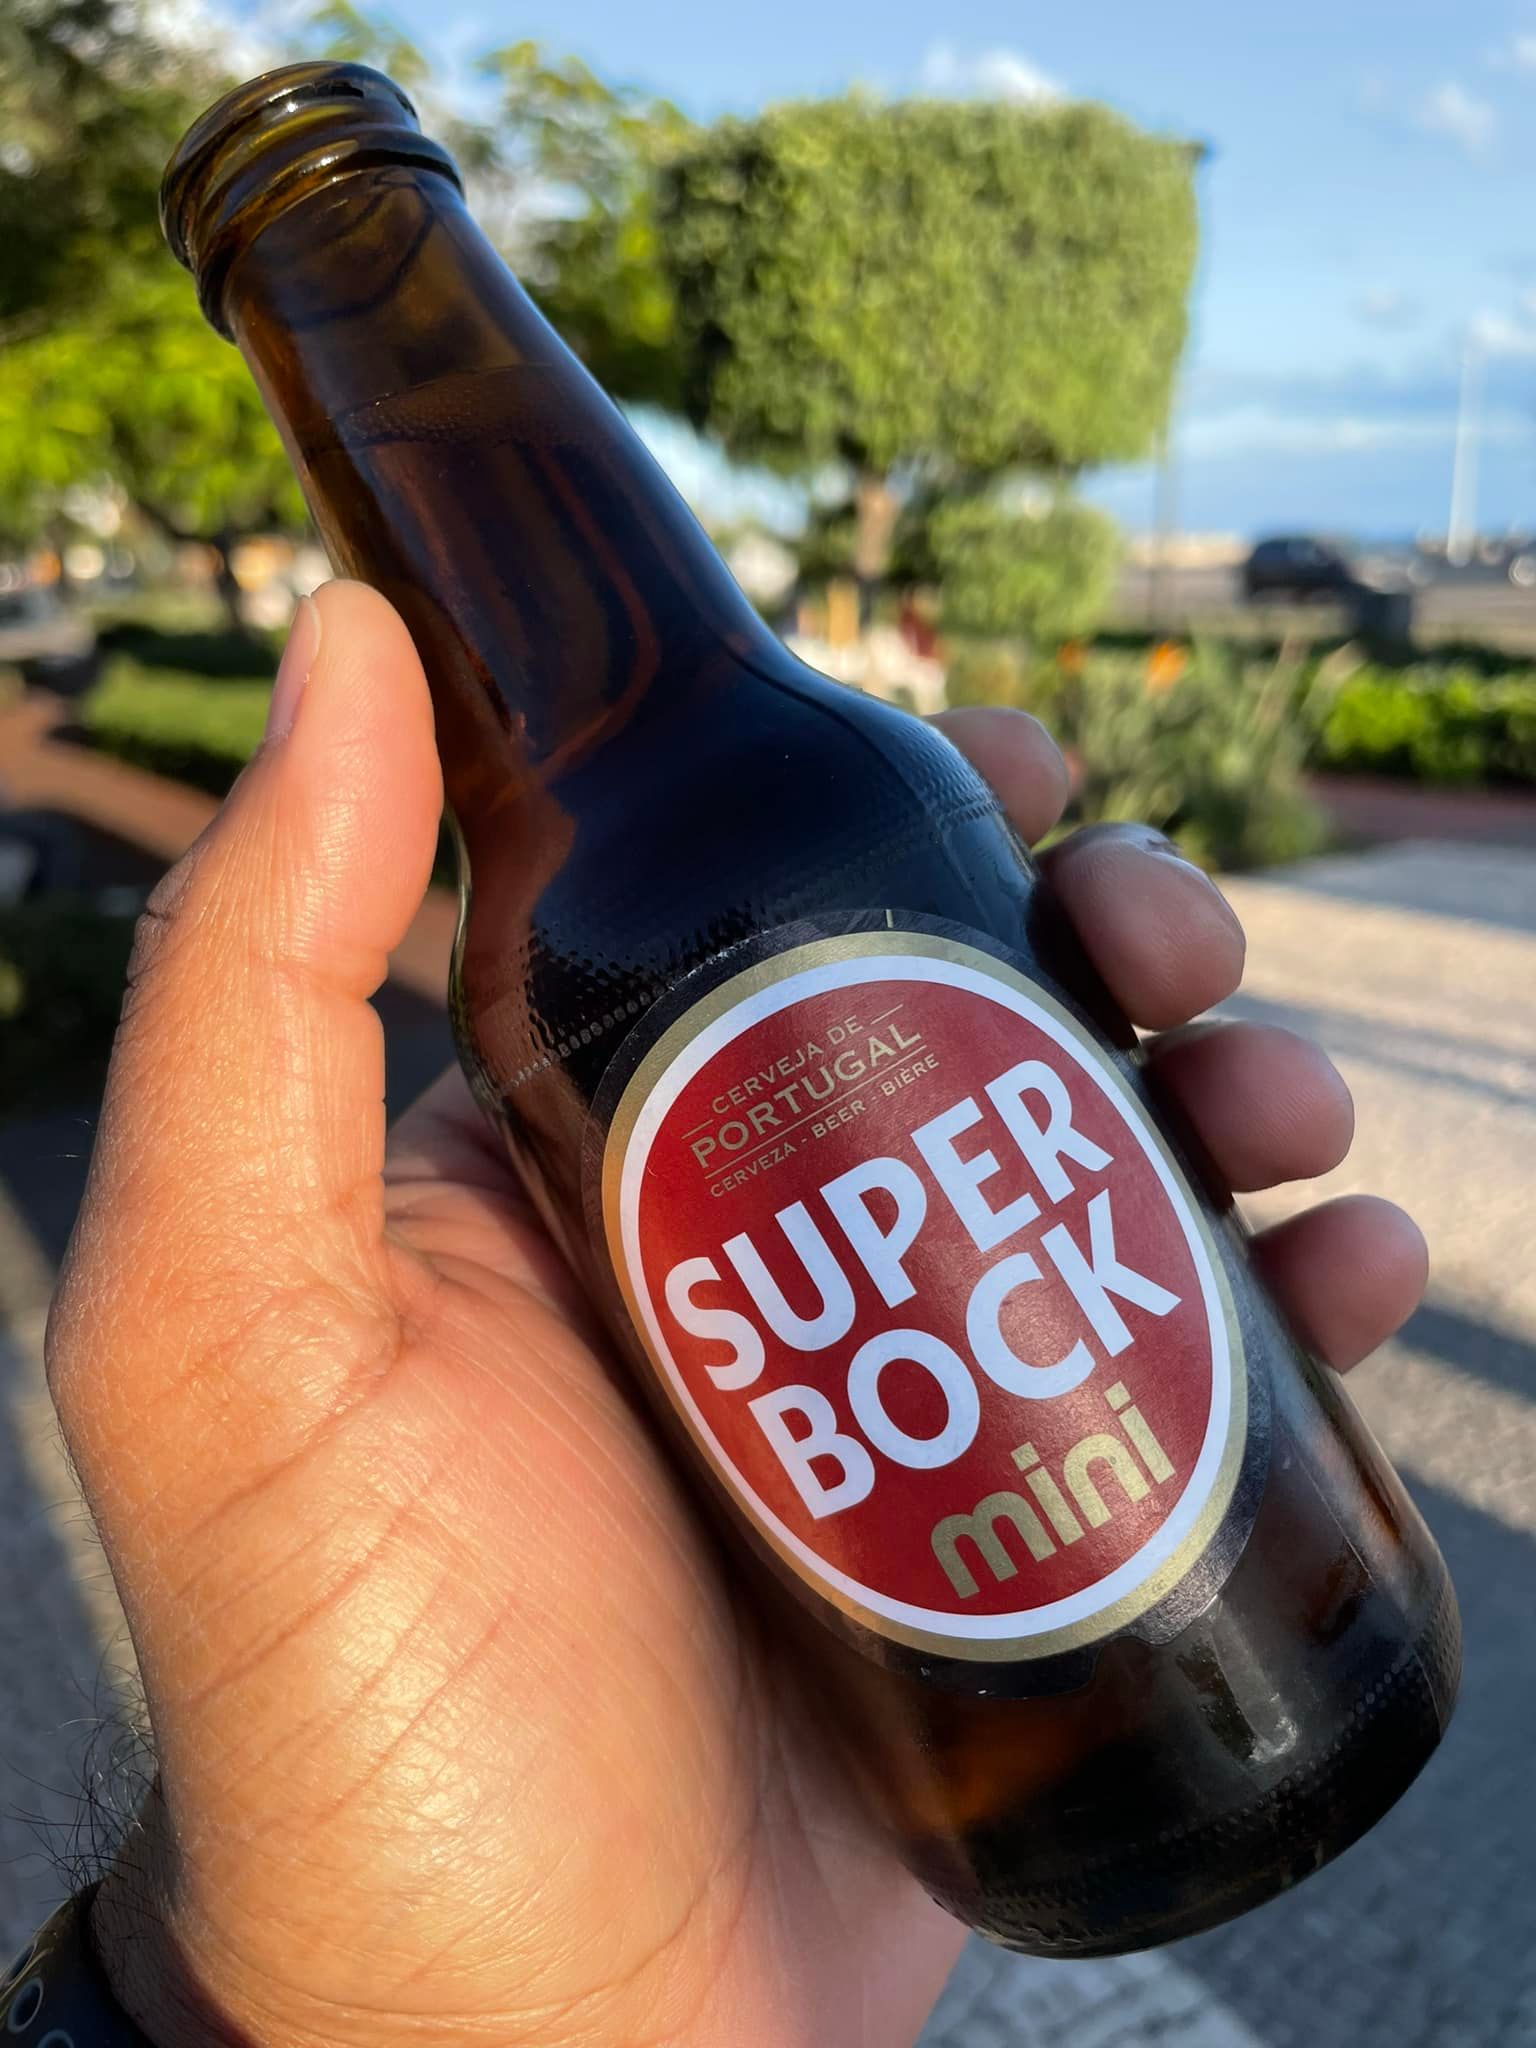 Super Bock
